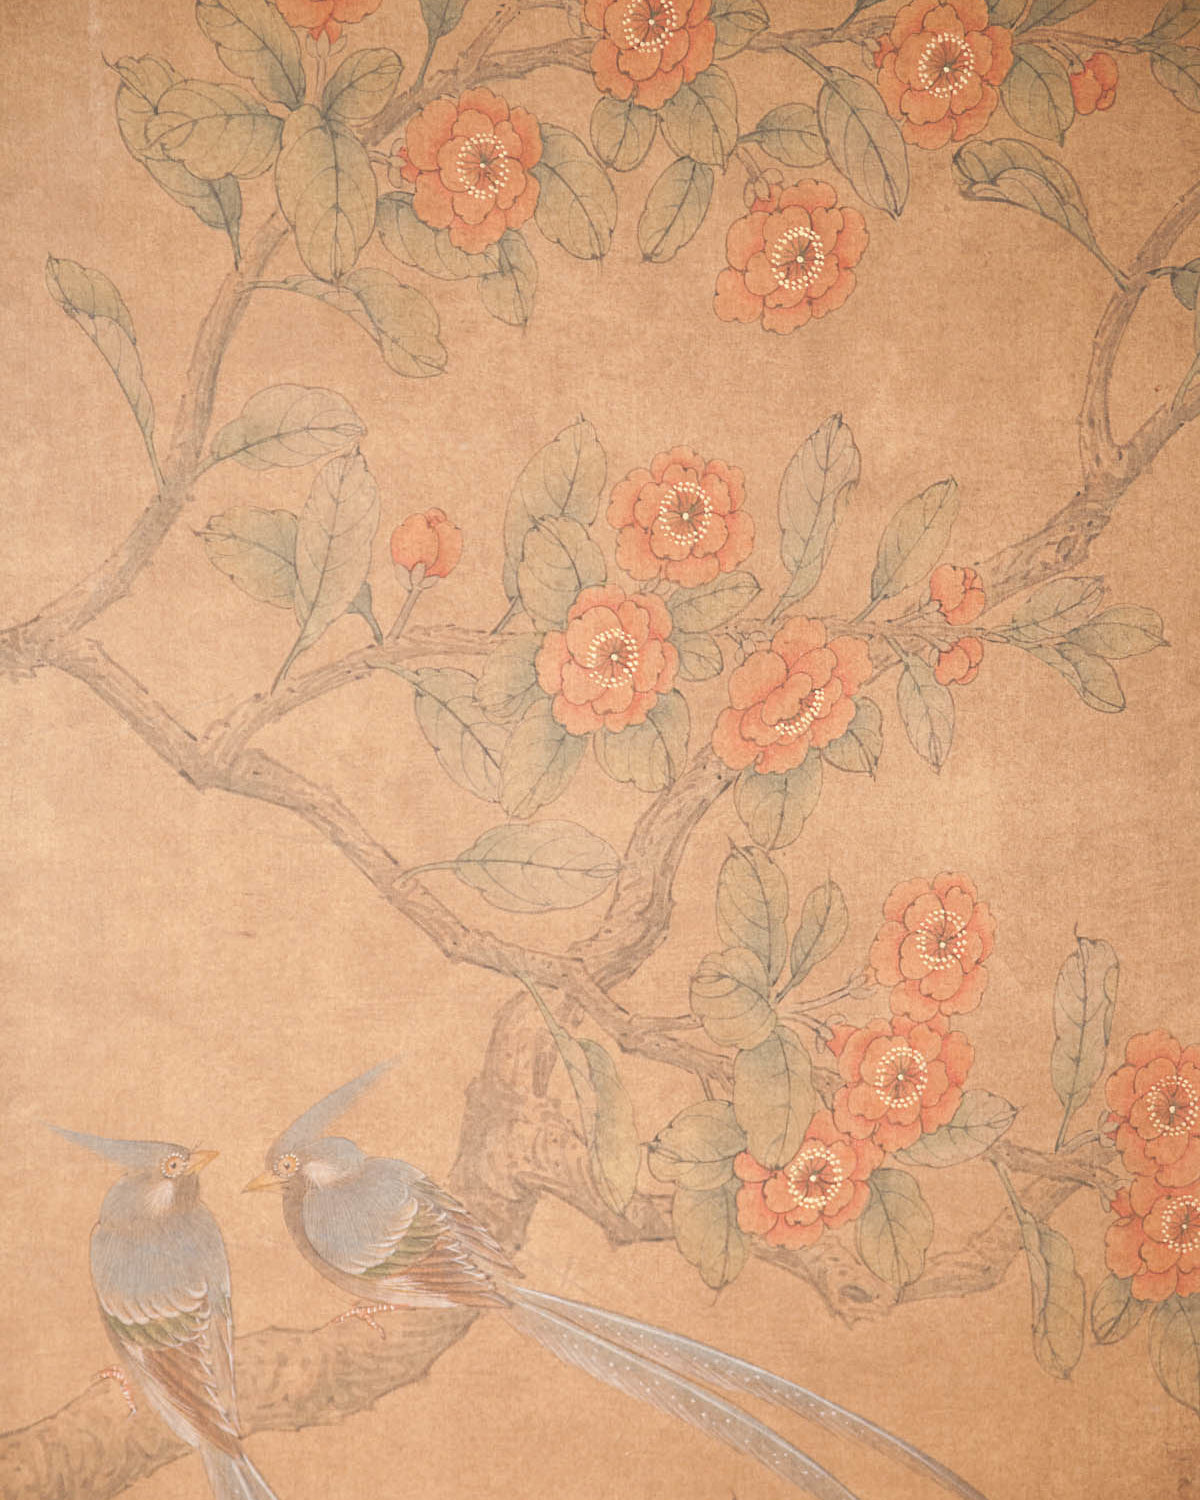 Lawrence & Scott Sung Tze-Chin "Joyous Spring" Ink on Silk 4-Panel Screen (6 ft x 6 ft)